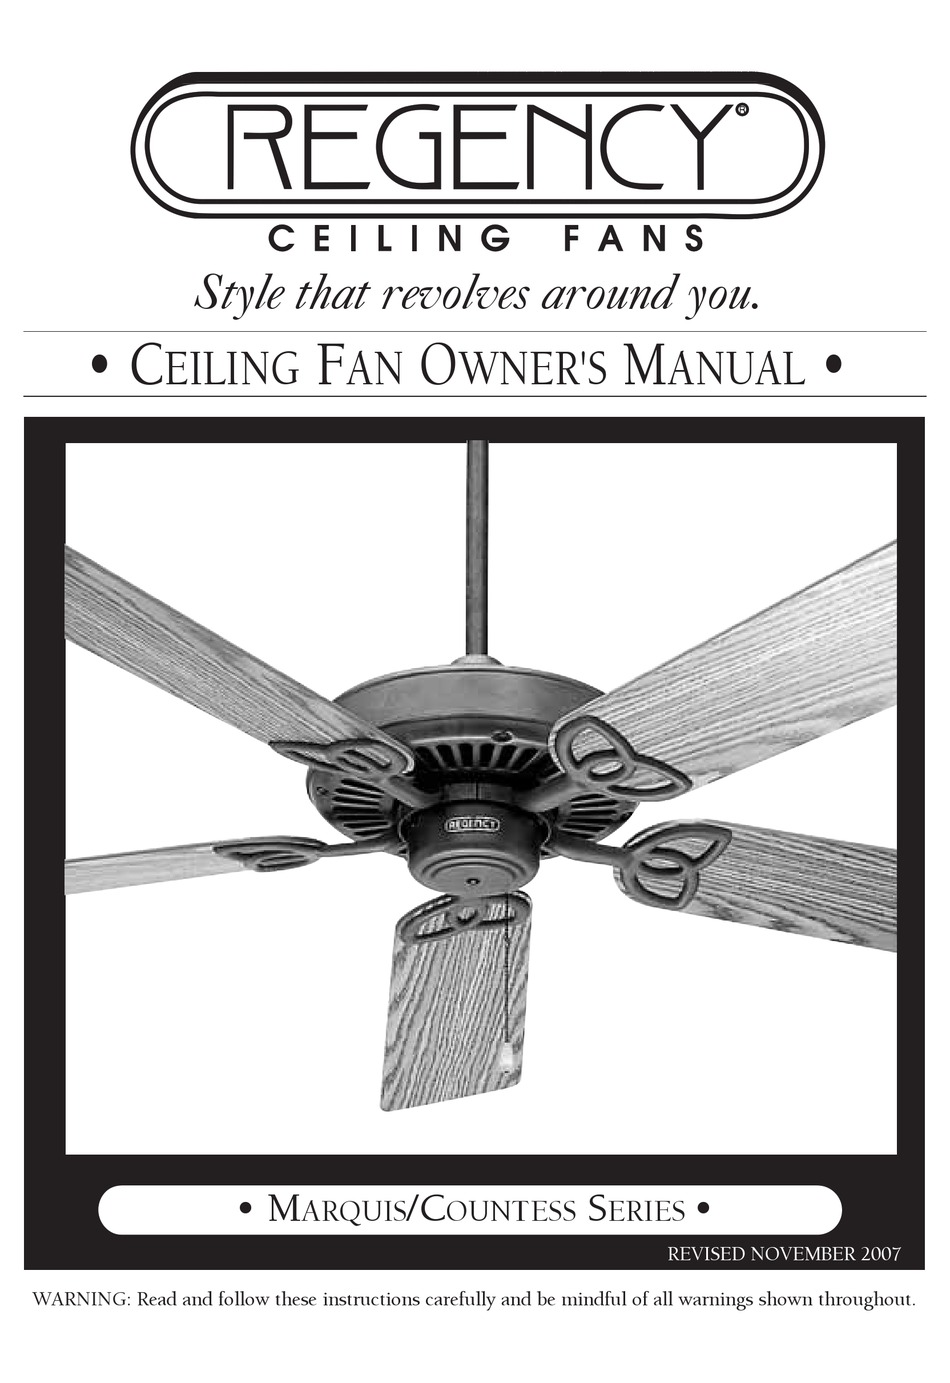 Regency Ceiling Fans Marquis Series